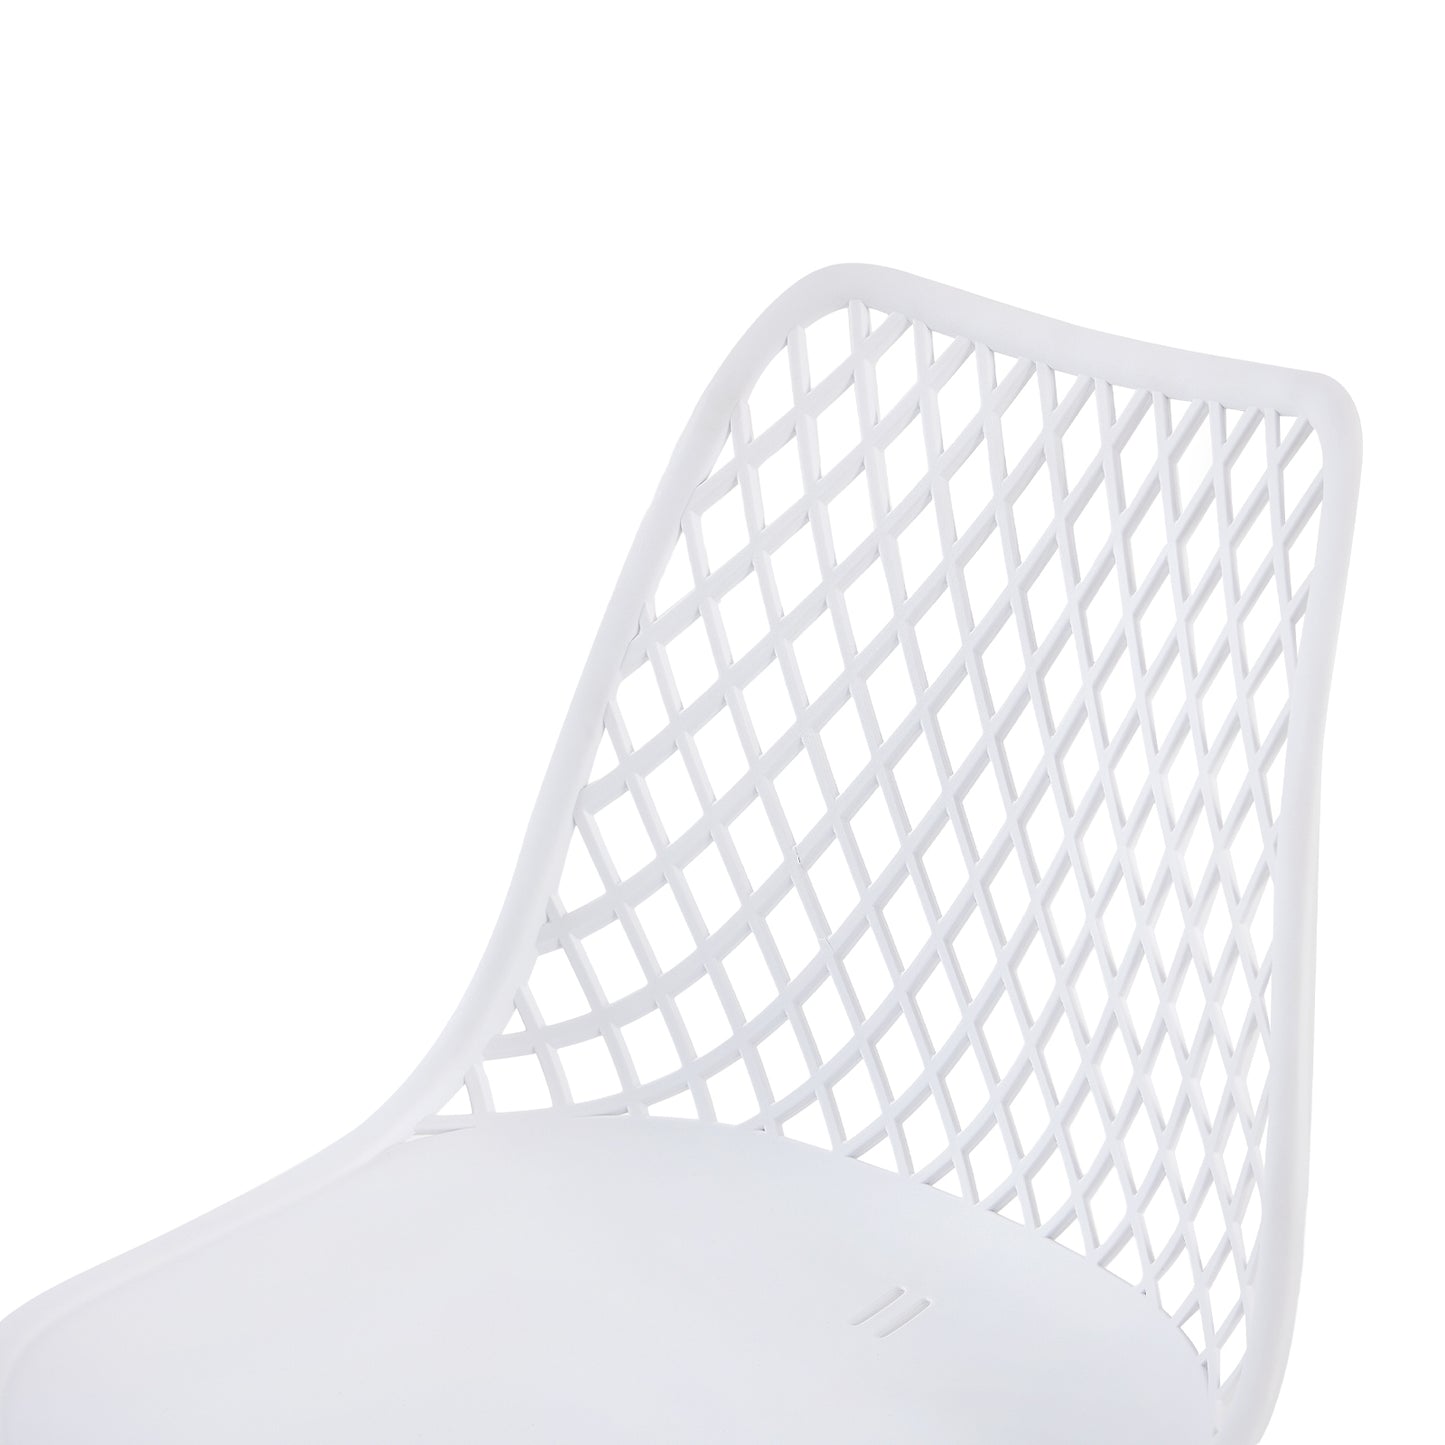 MOLSON Hollow Chair with Beech Legs - White